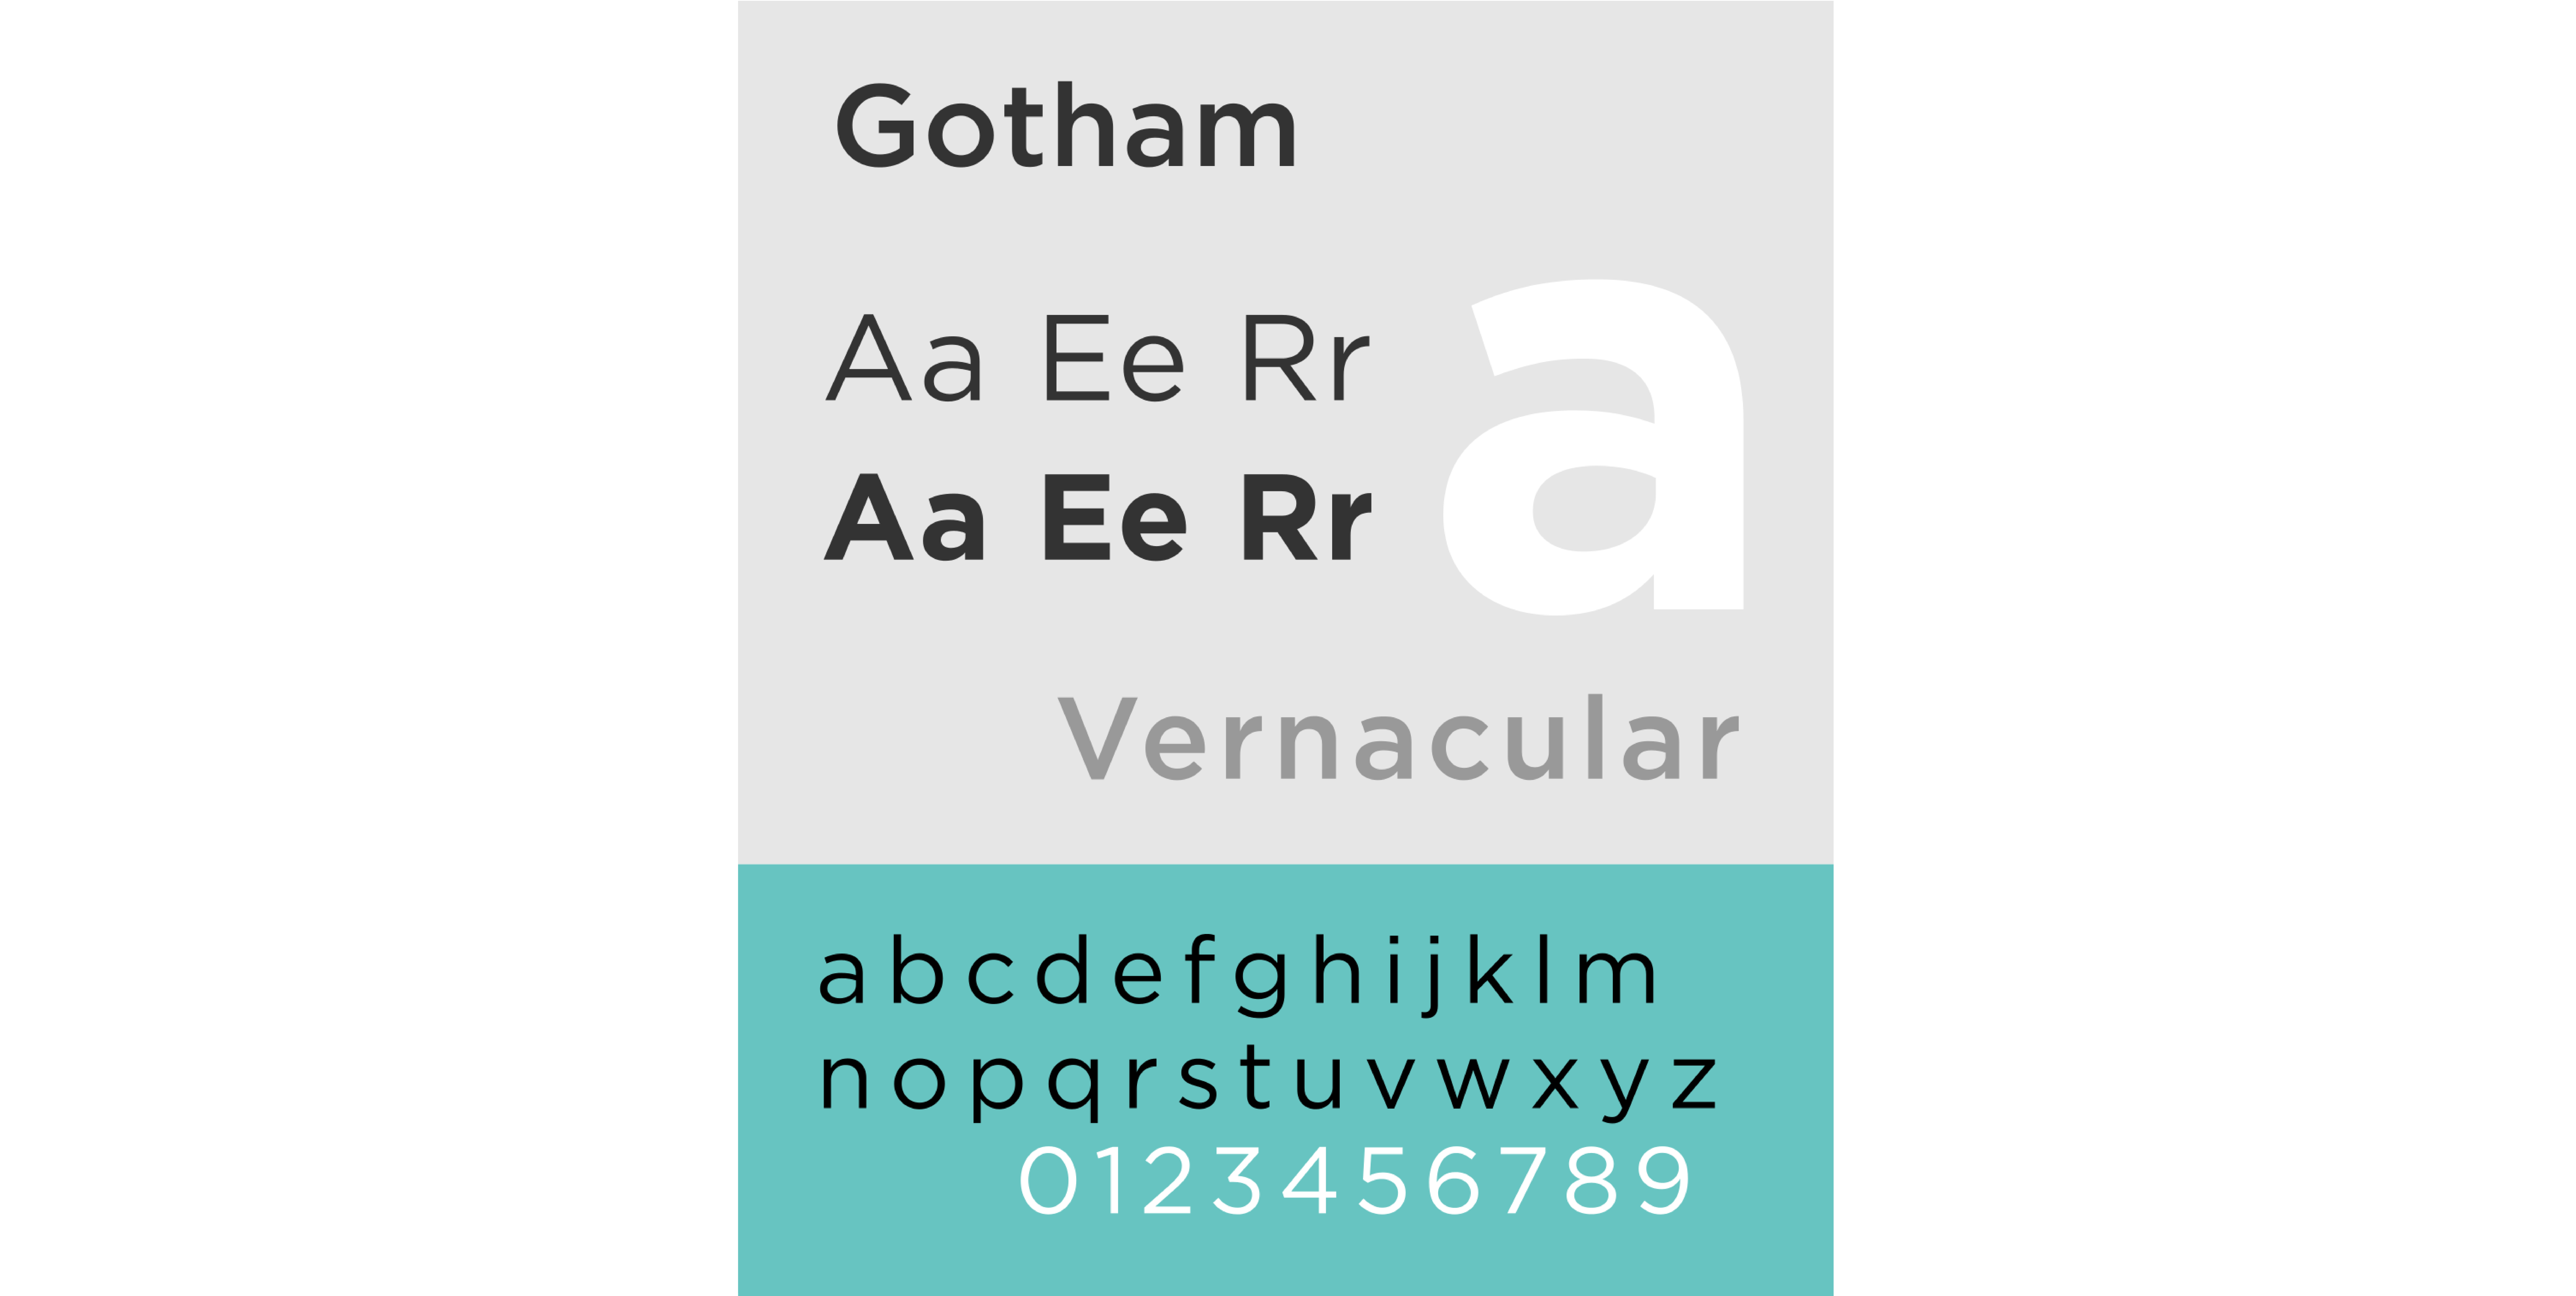 The Gotham Typeface. 